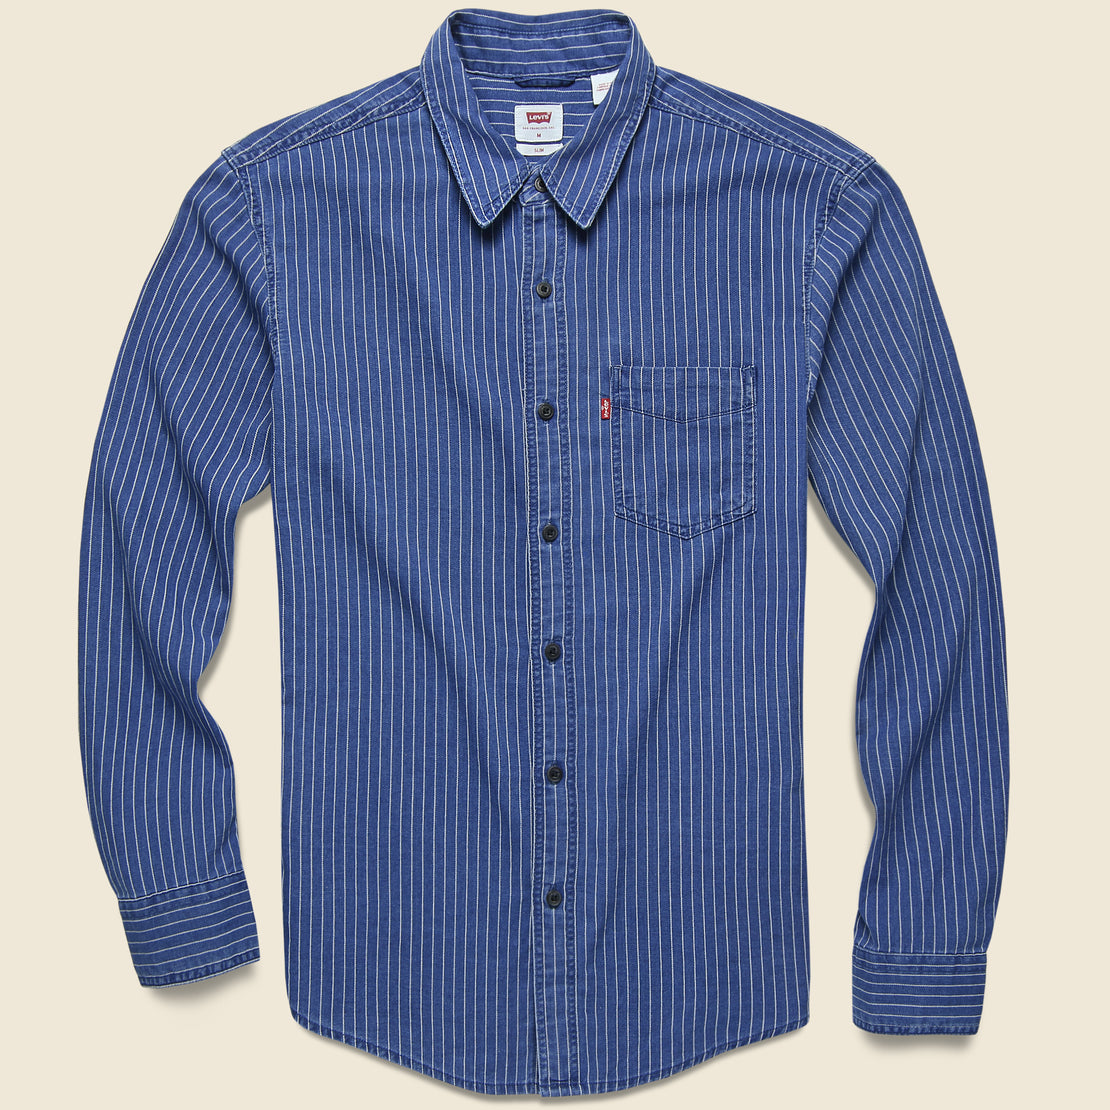 Levis Premium Sunset One-Pocket Slim Shirt - Indigo Stripe